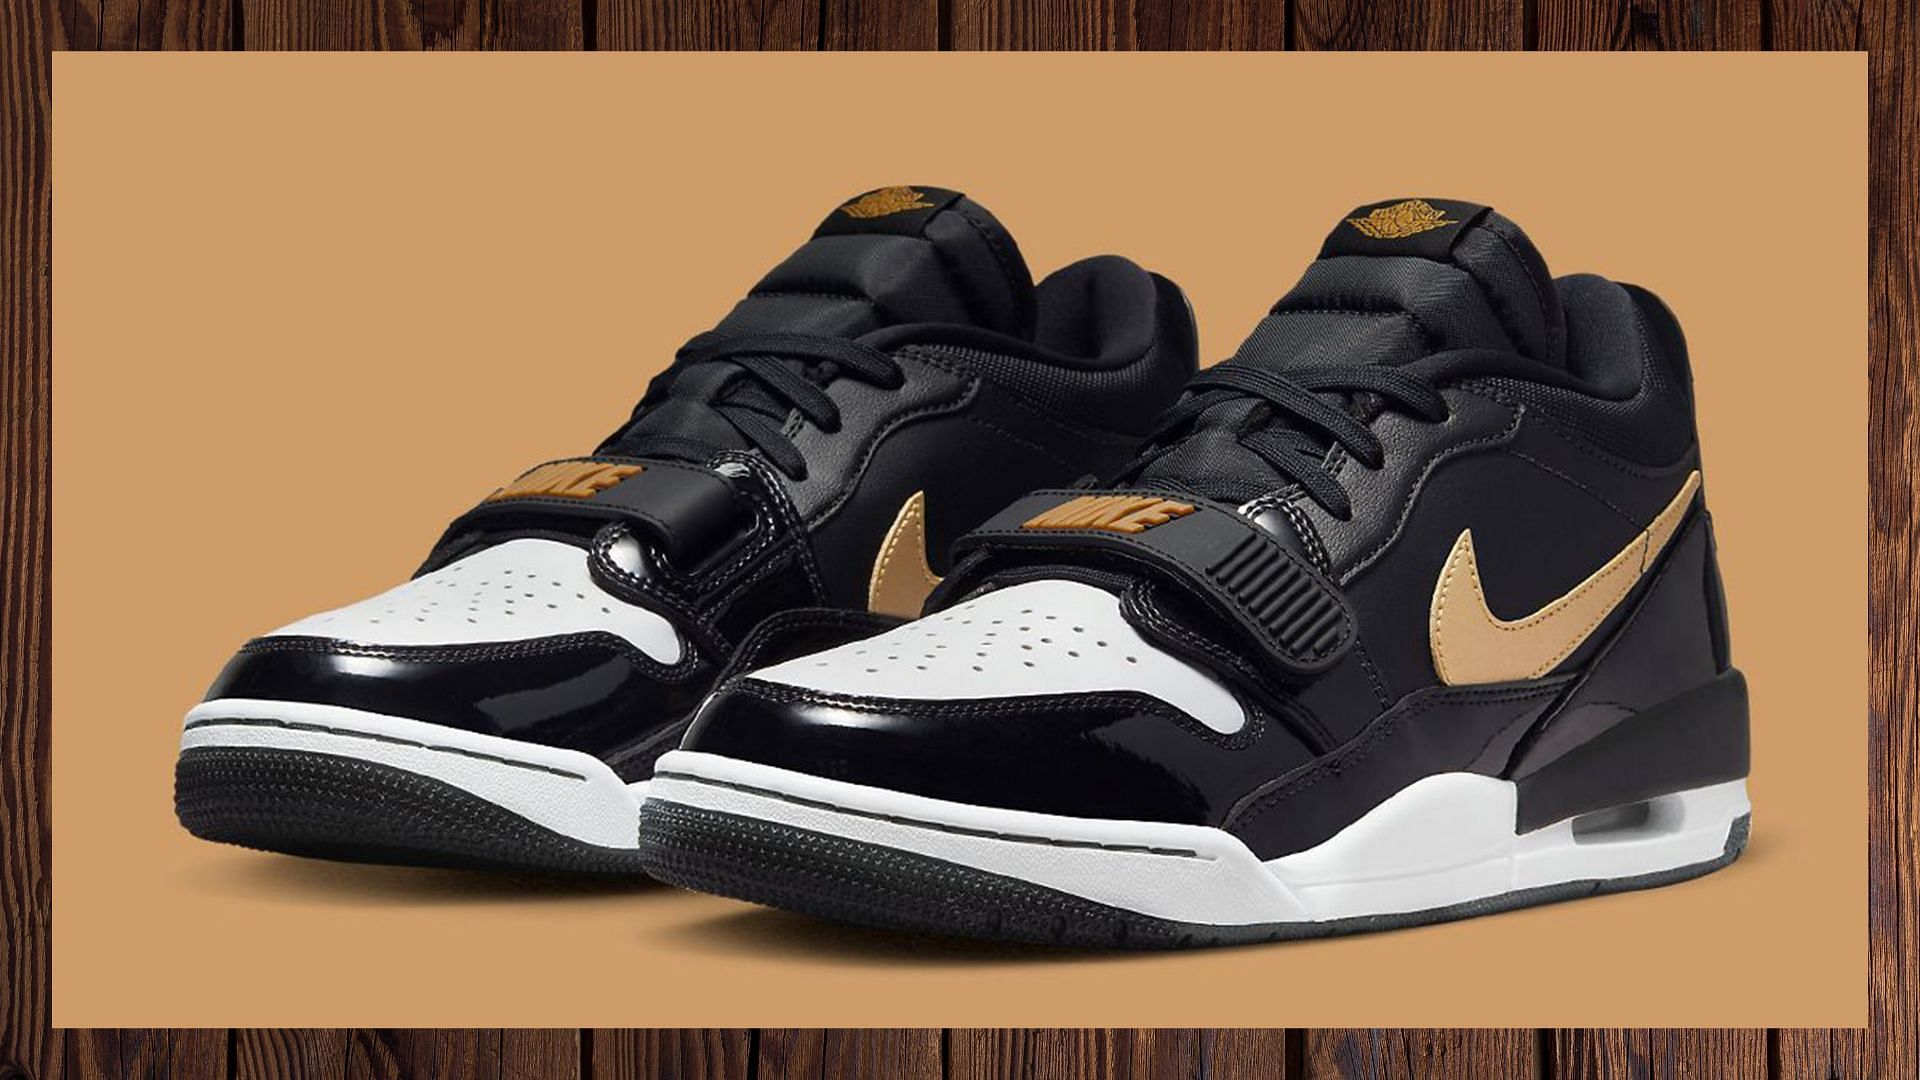 Jordan Legacy 312 Low Black and Gold shoes (Image via Nike)